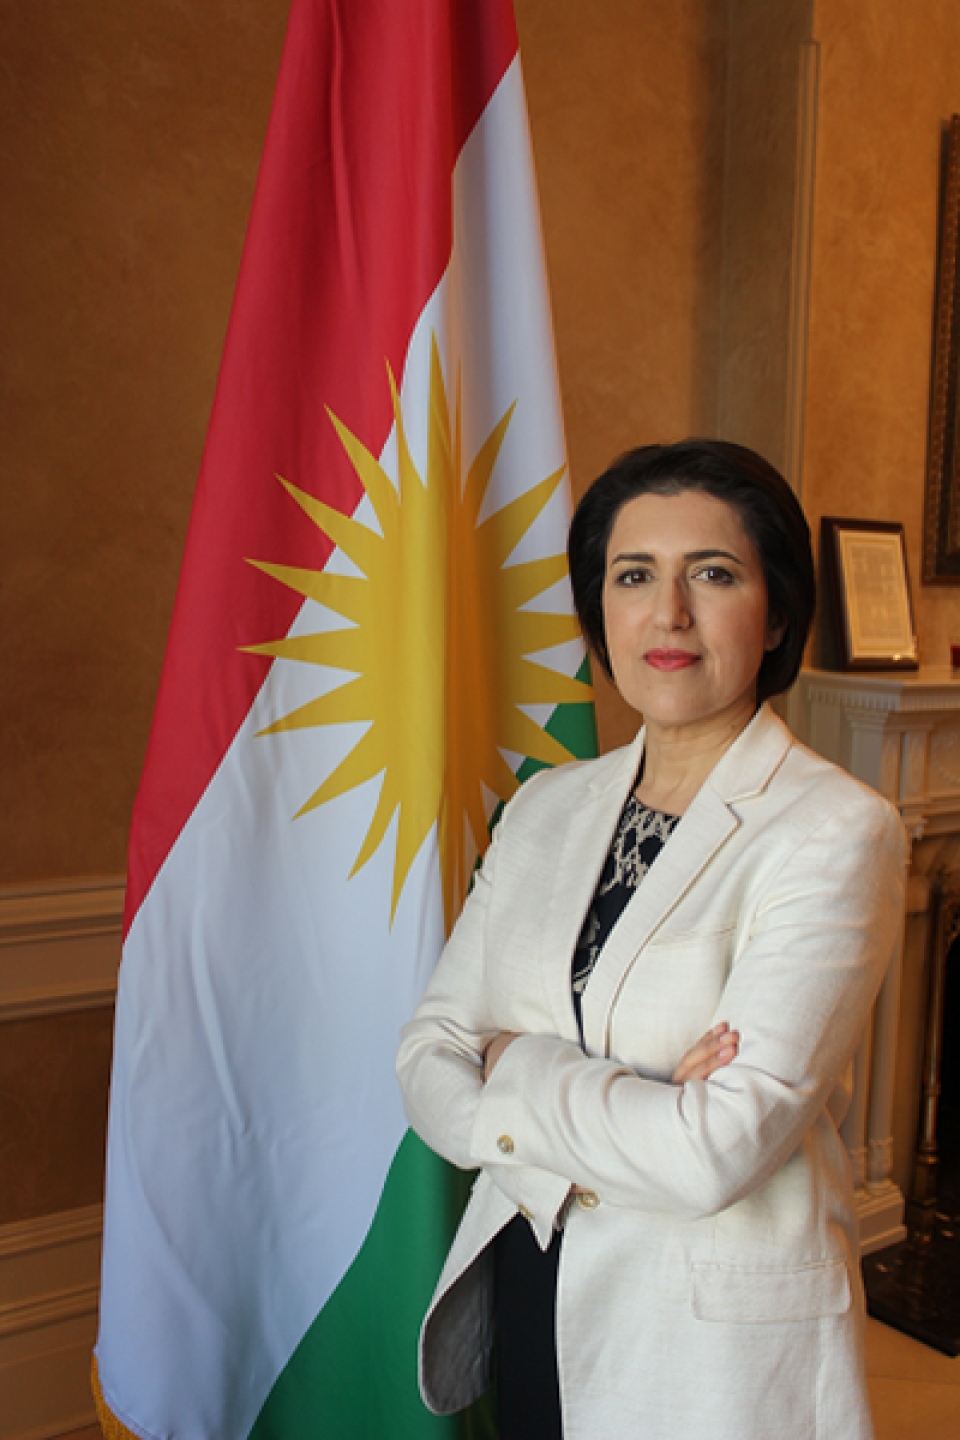 Ms. Bayan Sami Abdul Rahman: Kurdistan Regional Government Representative